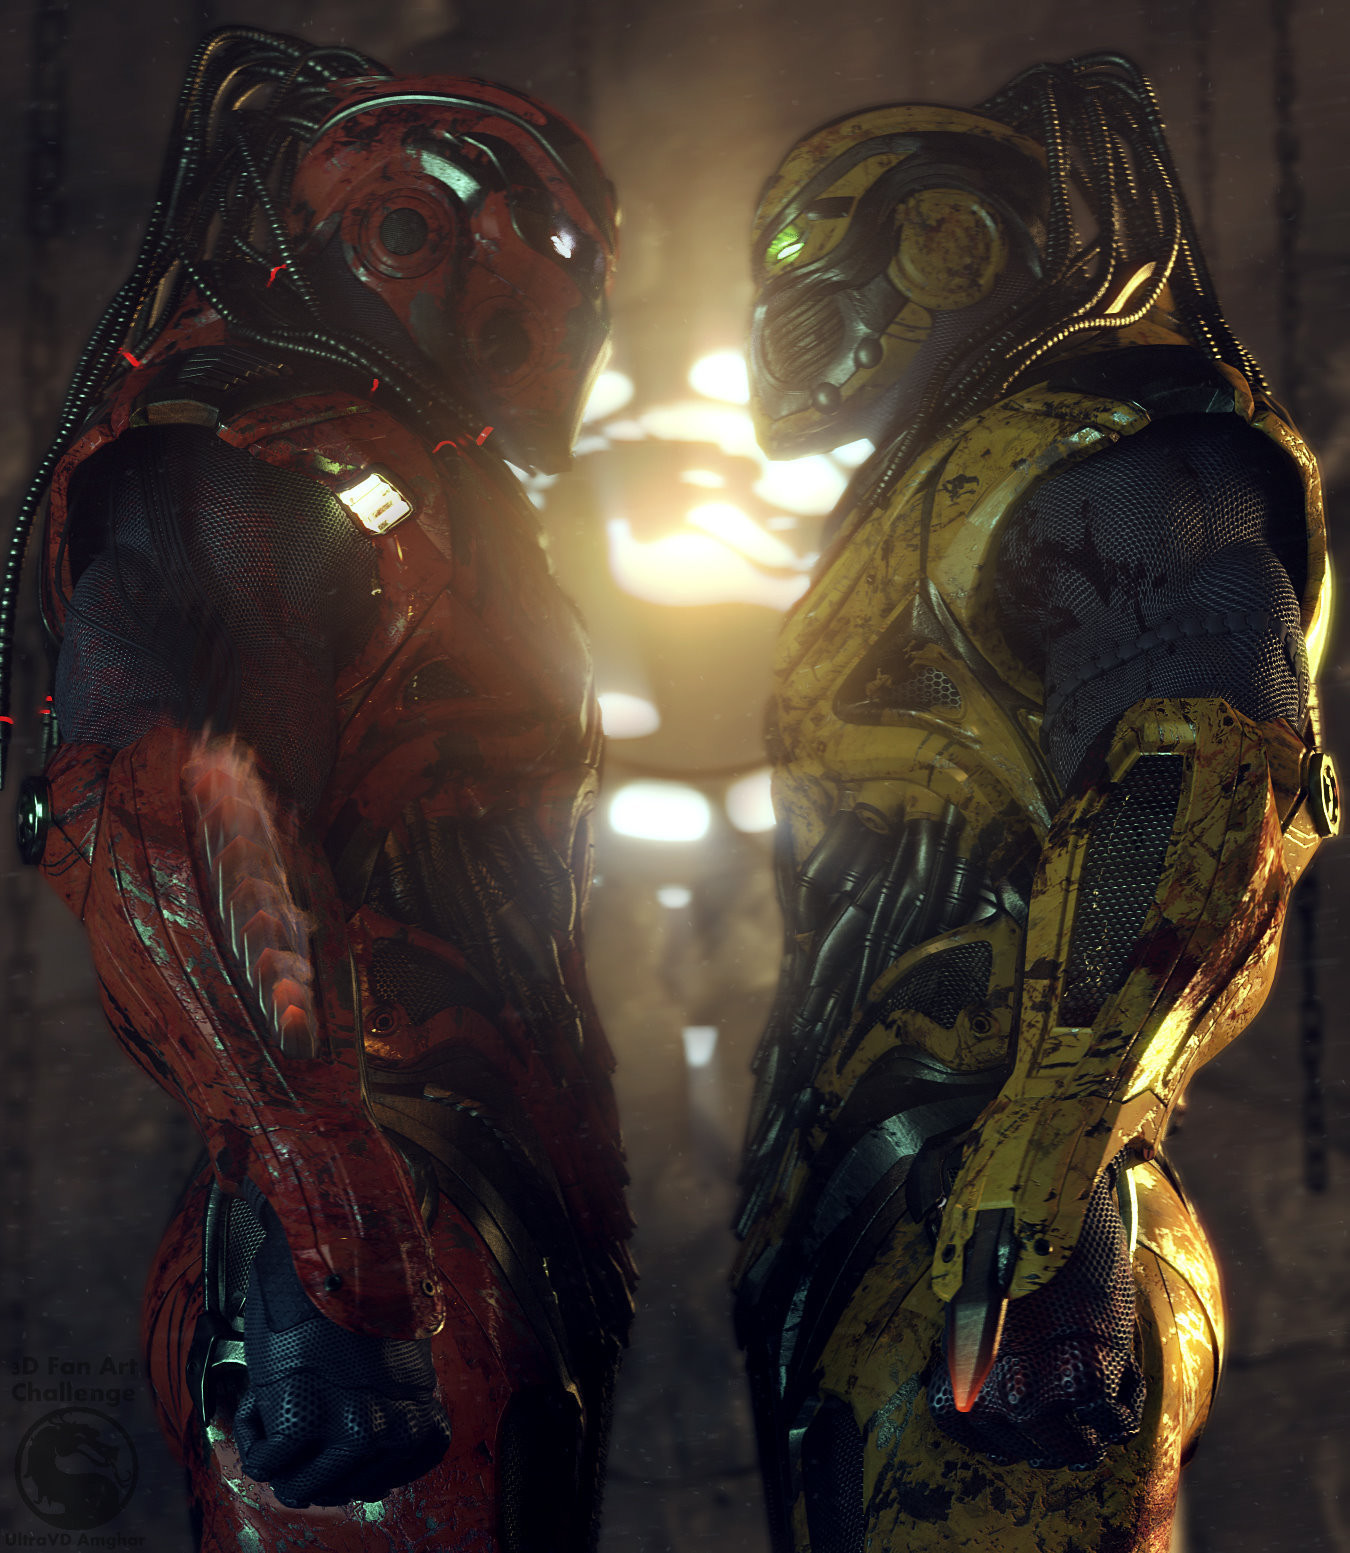 Cyrax vs Sektor (Mortal Kombat Fan Art)